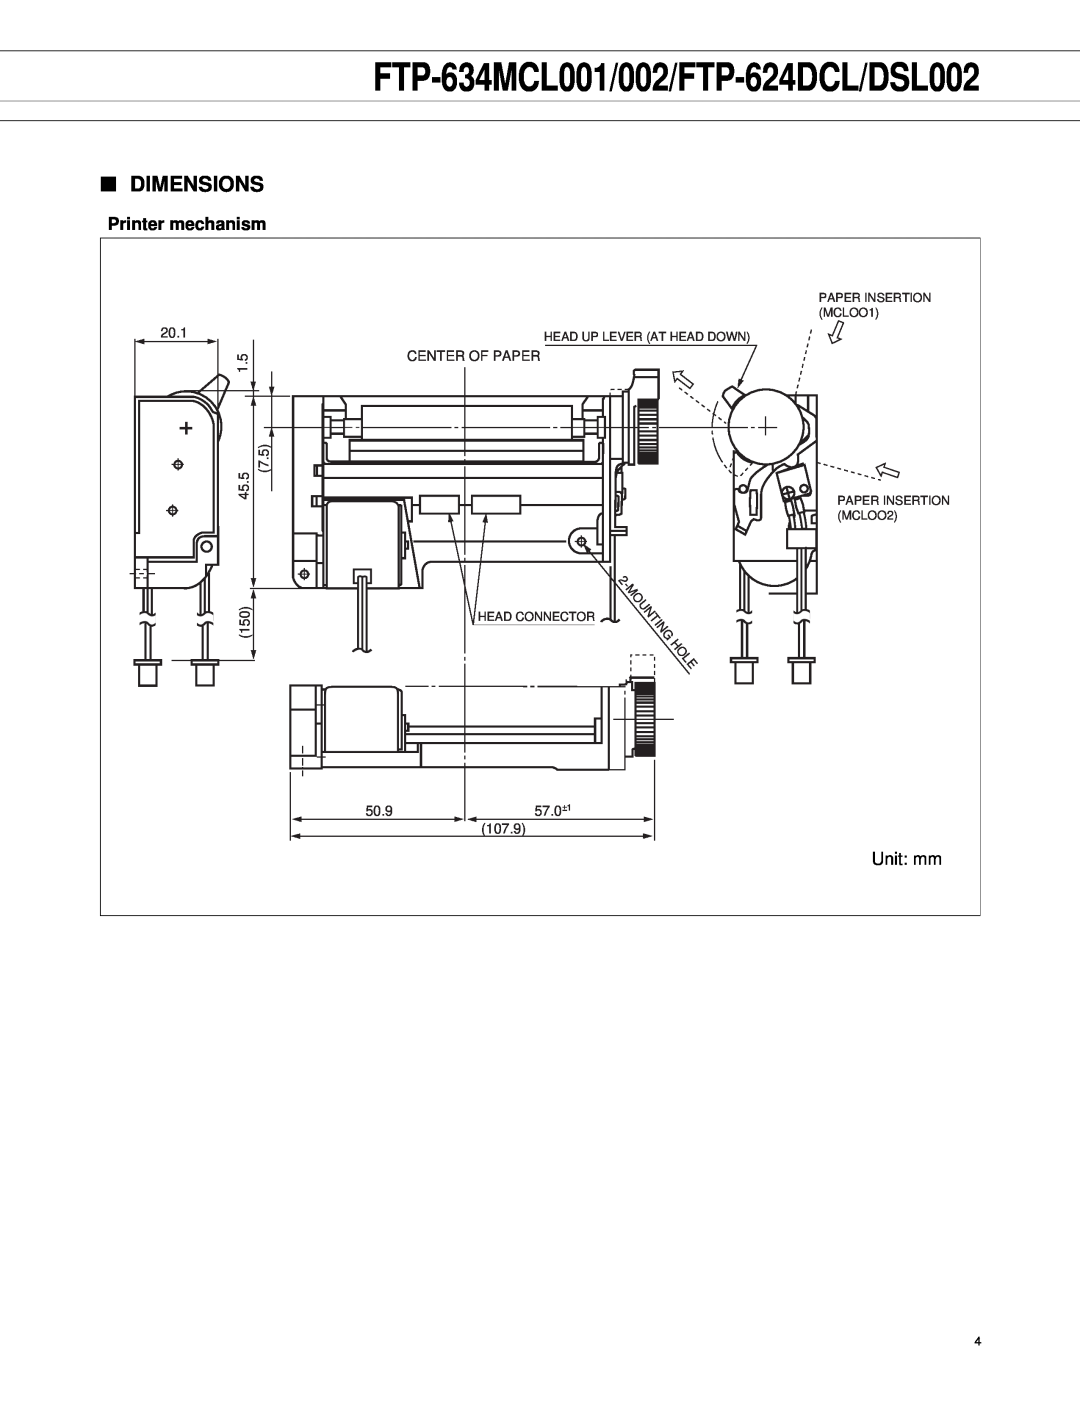 Fujitsu FTP-634MCL002 manual Dimensions, FTP-634MCL001/002/FTP-624DCL/DSL002, Printer mechanism 